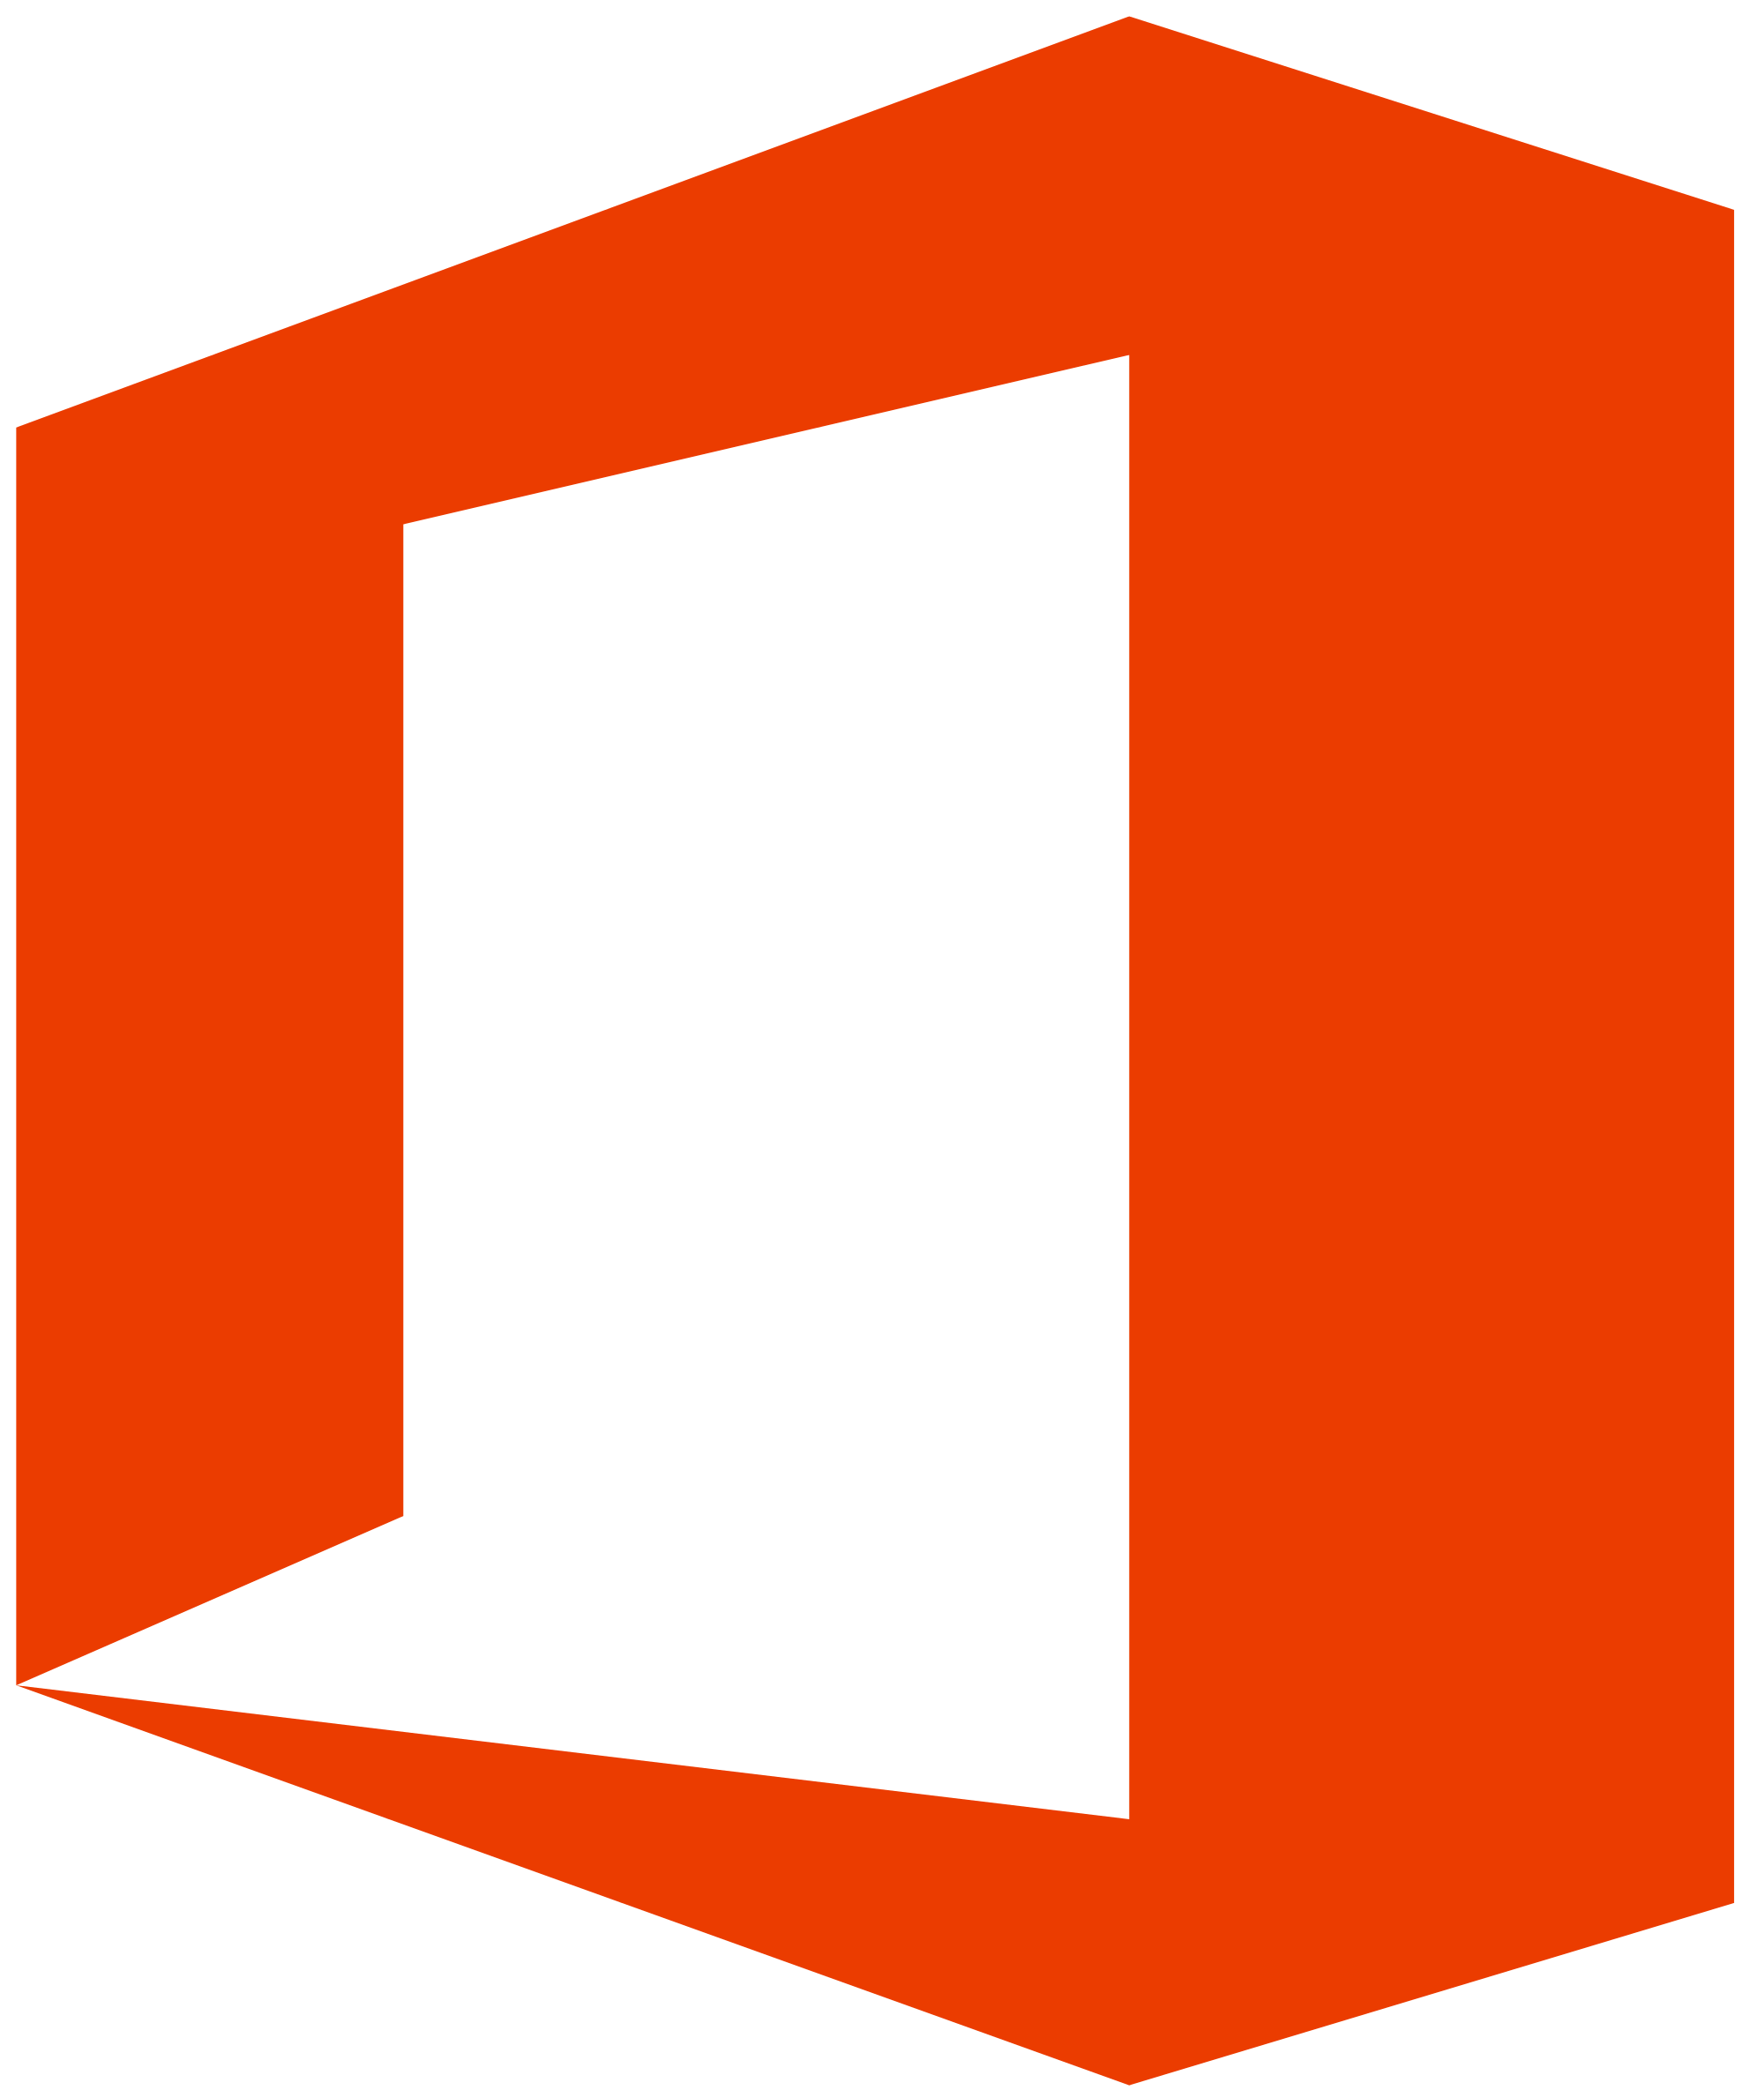 Office 2013 Logo - File:Microsoft Office 2013 logo.svg - Wikimedia Commons